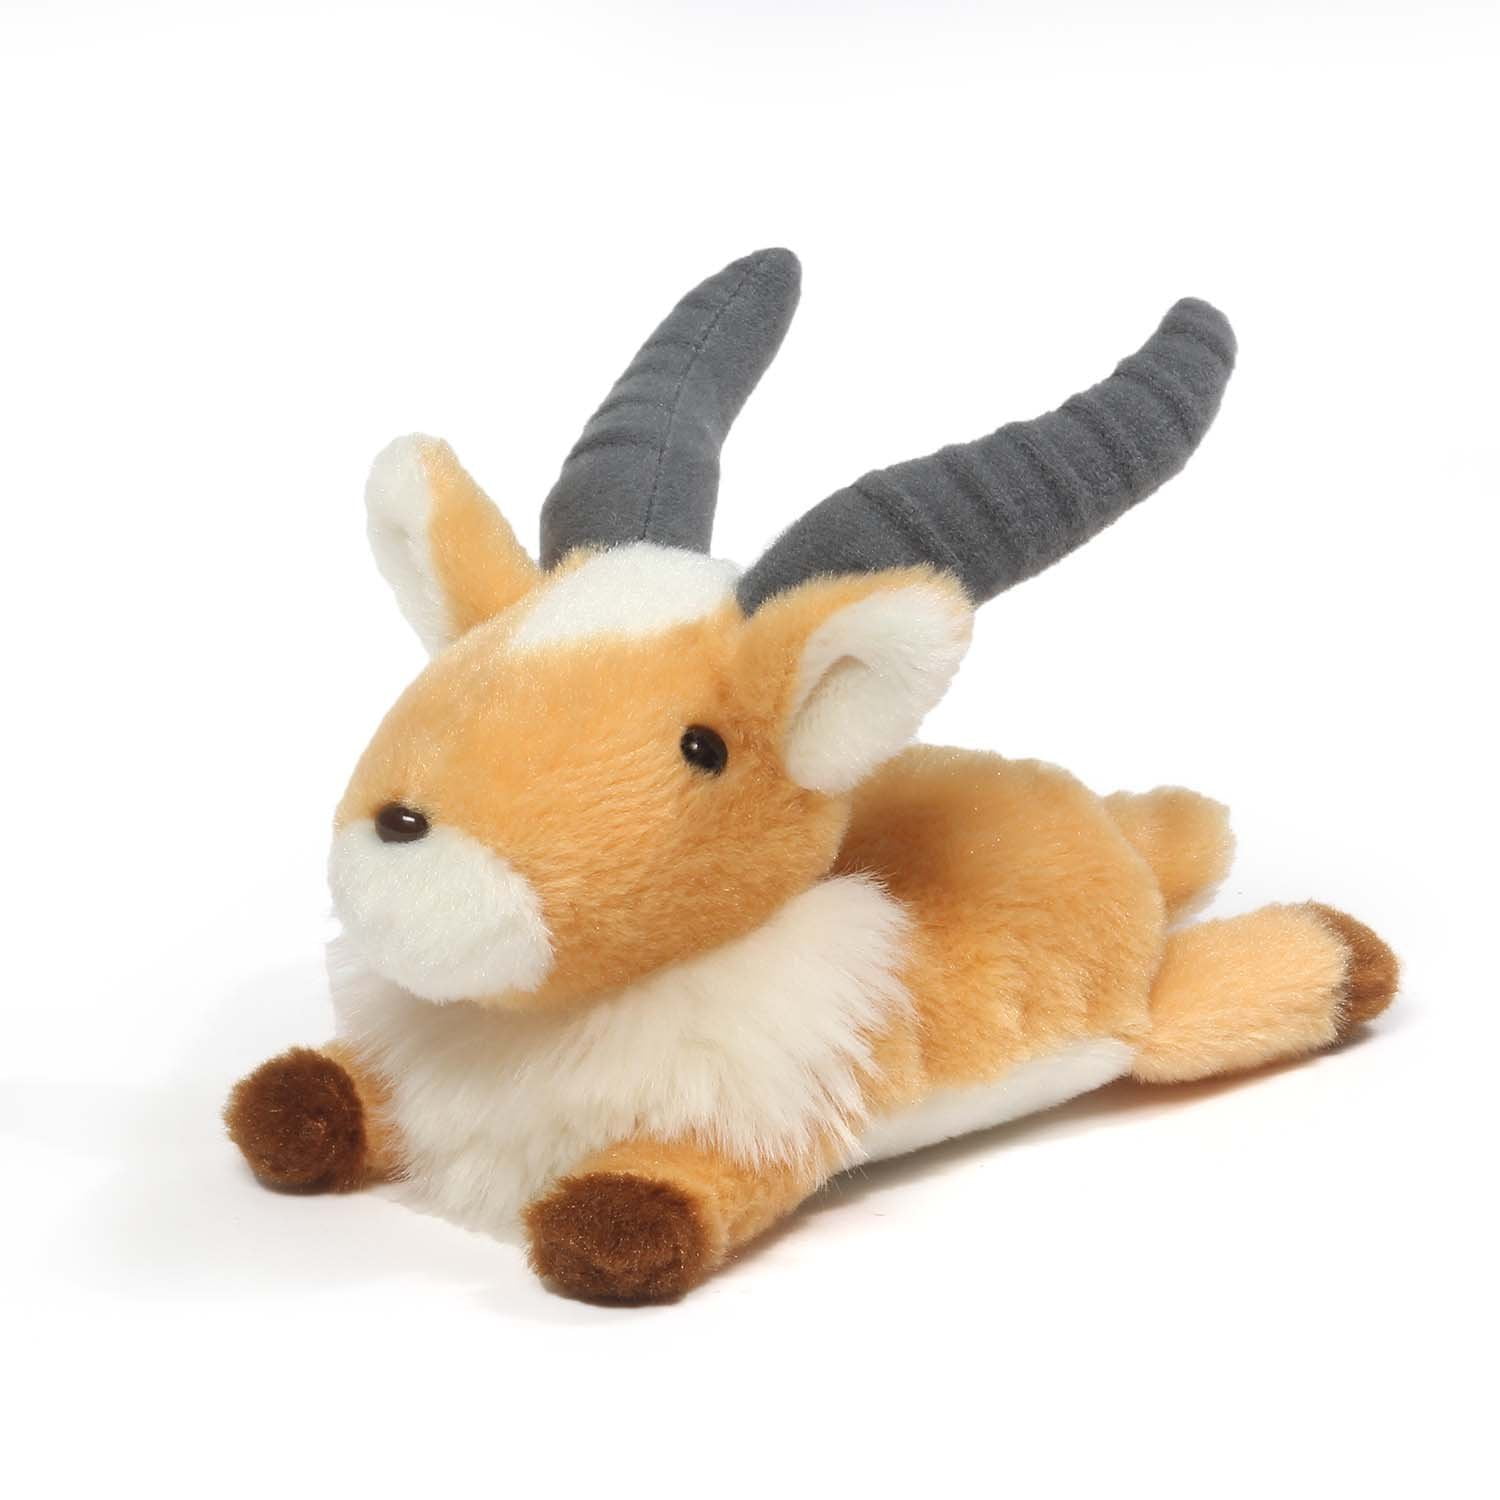 elk stuffed animal